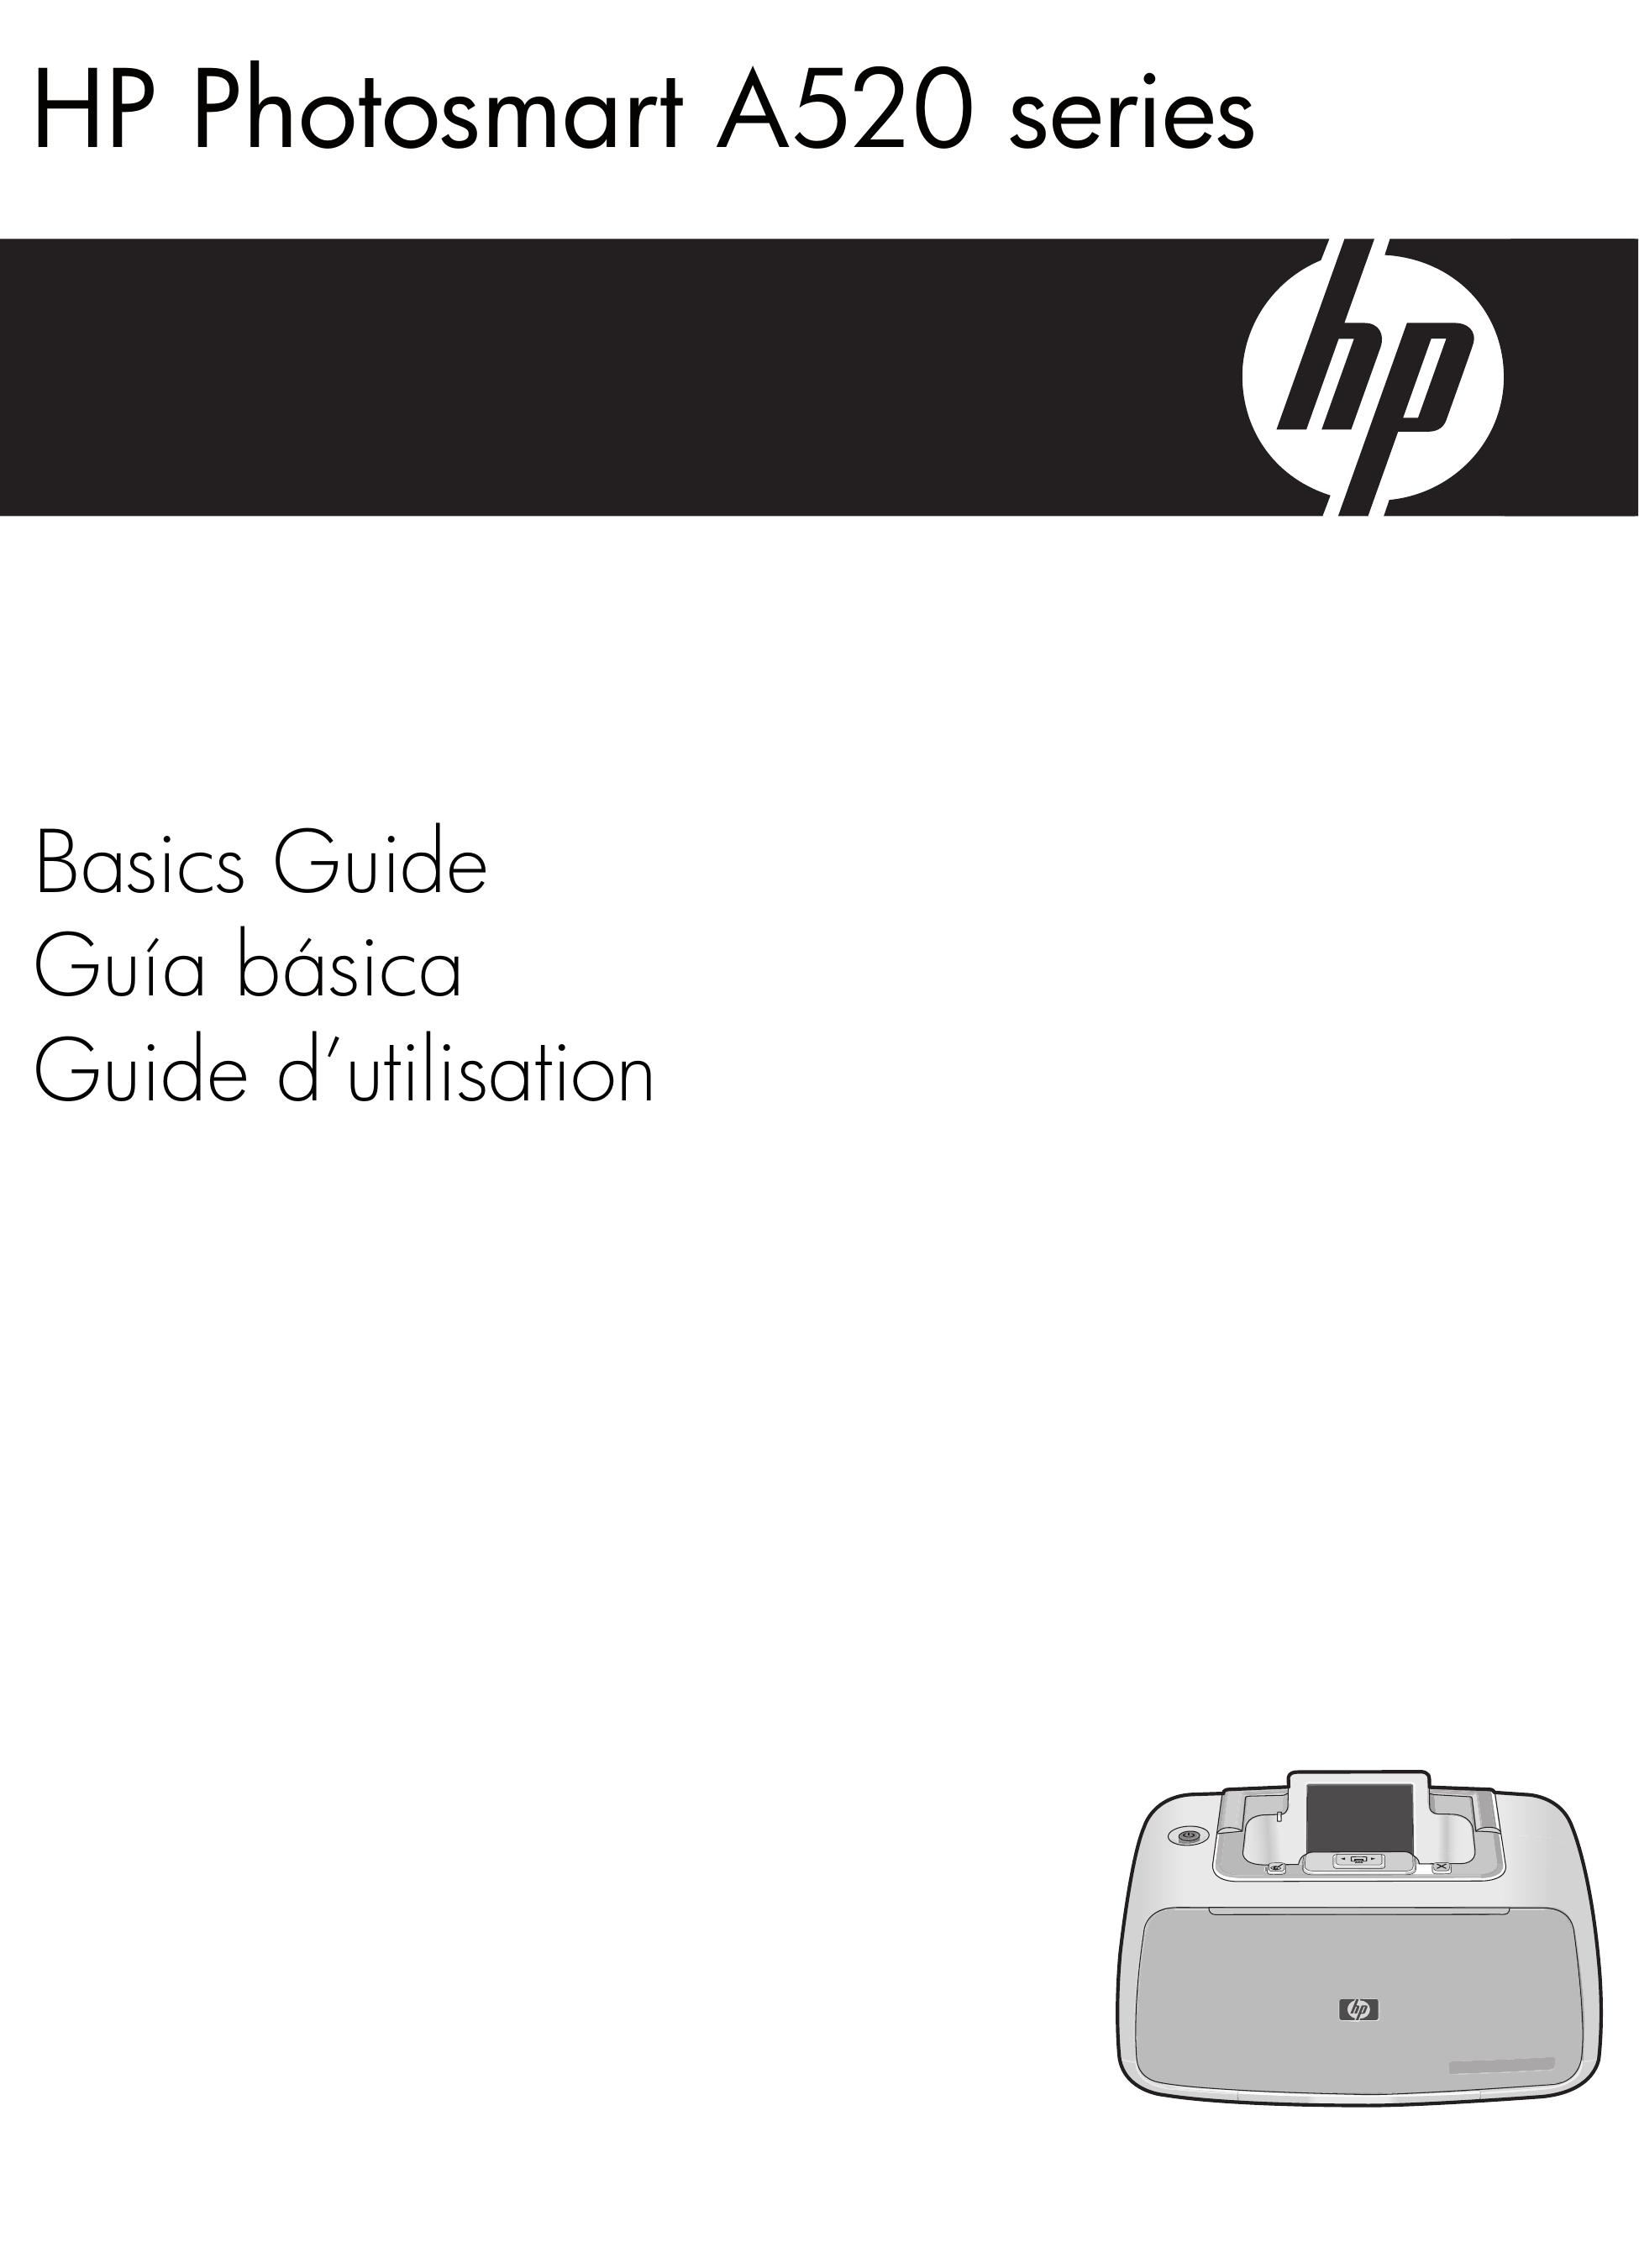 HP (Hewlett-Packard) A528 Photo Printer User Manual